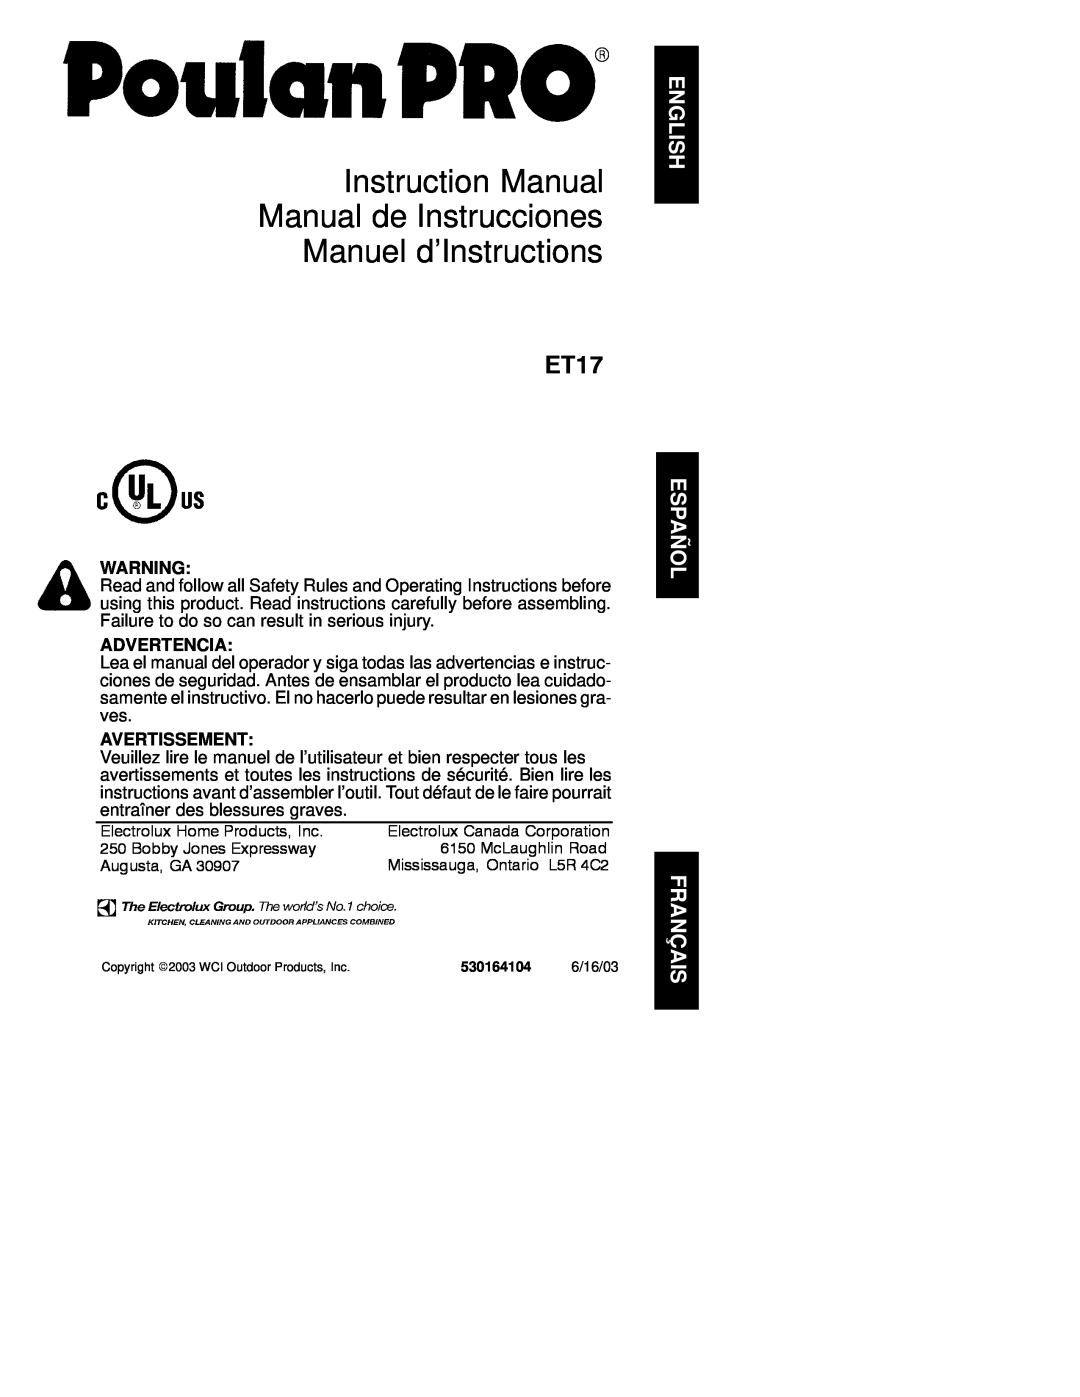 Poulan 530164104 instruction manual Advertencia, Avertissement, Instruction Manual Manual de Instrucciones, ET17 